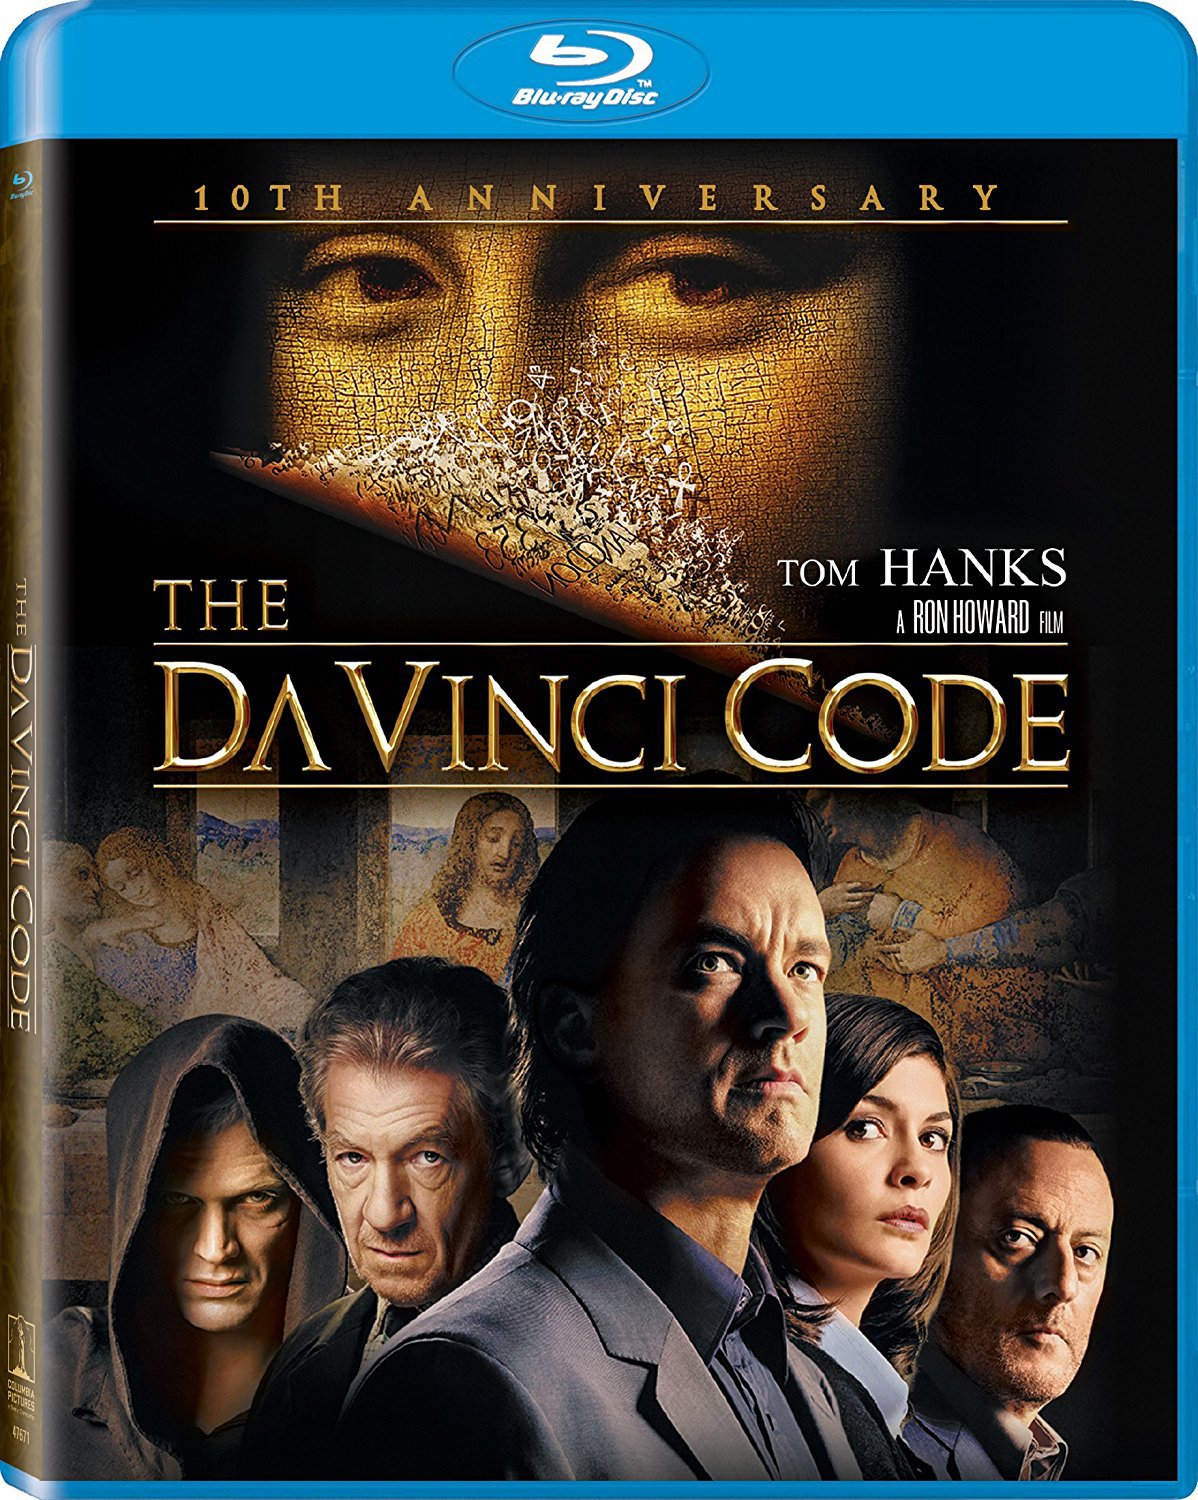 DaVinci Code, The